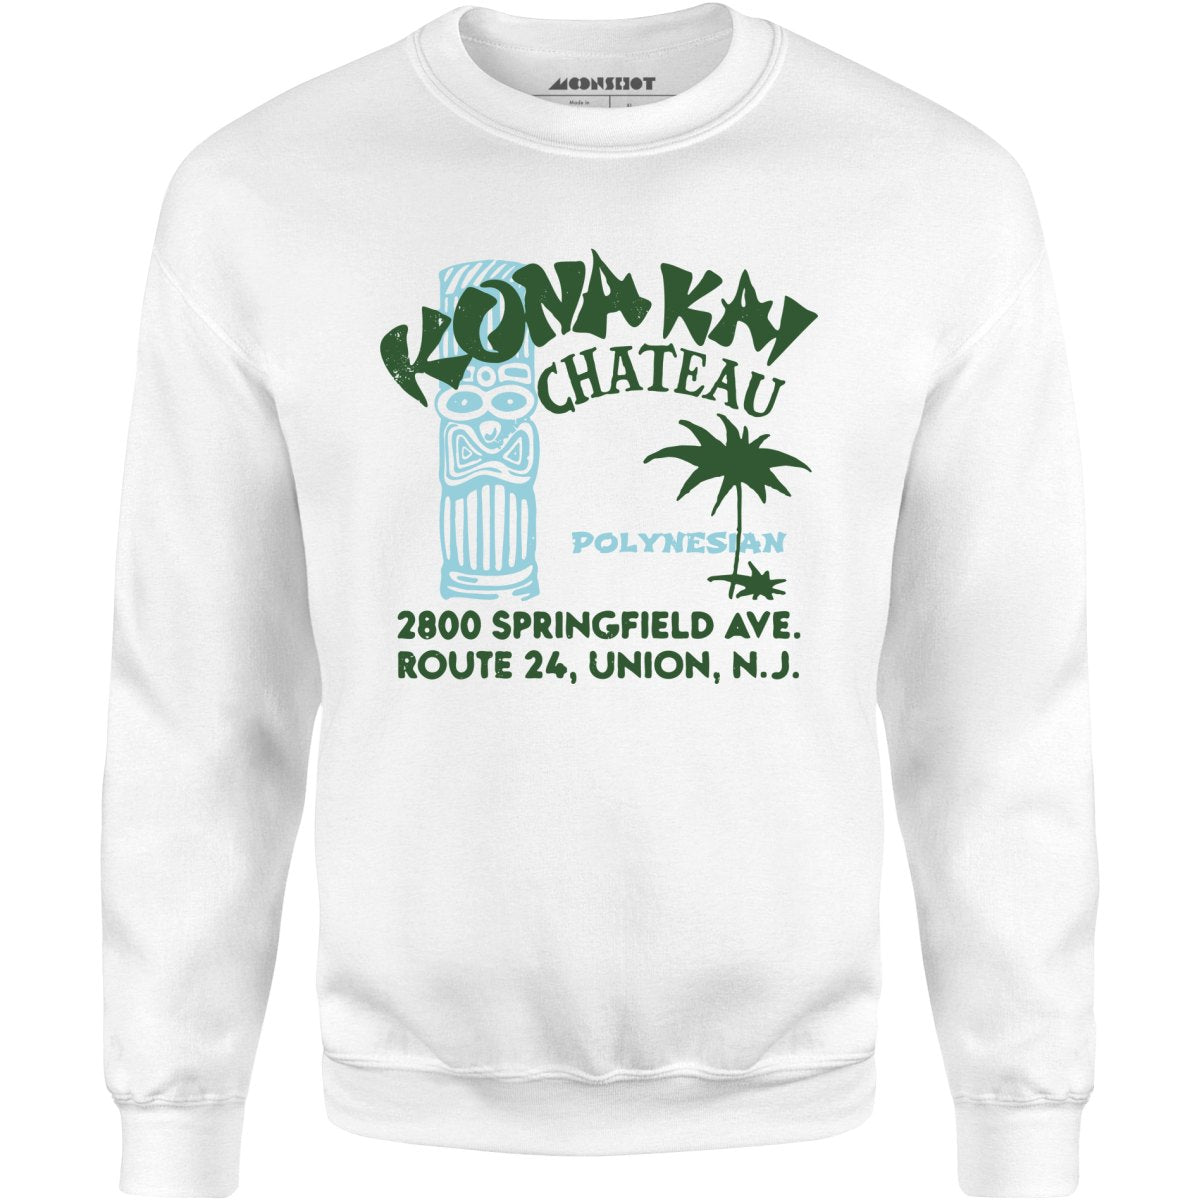 Kona Kai Chateu - Union, NJ - Vintage Tiki Bar - Unisex Sweatshirt